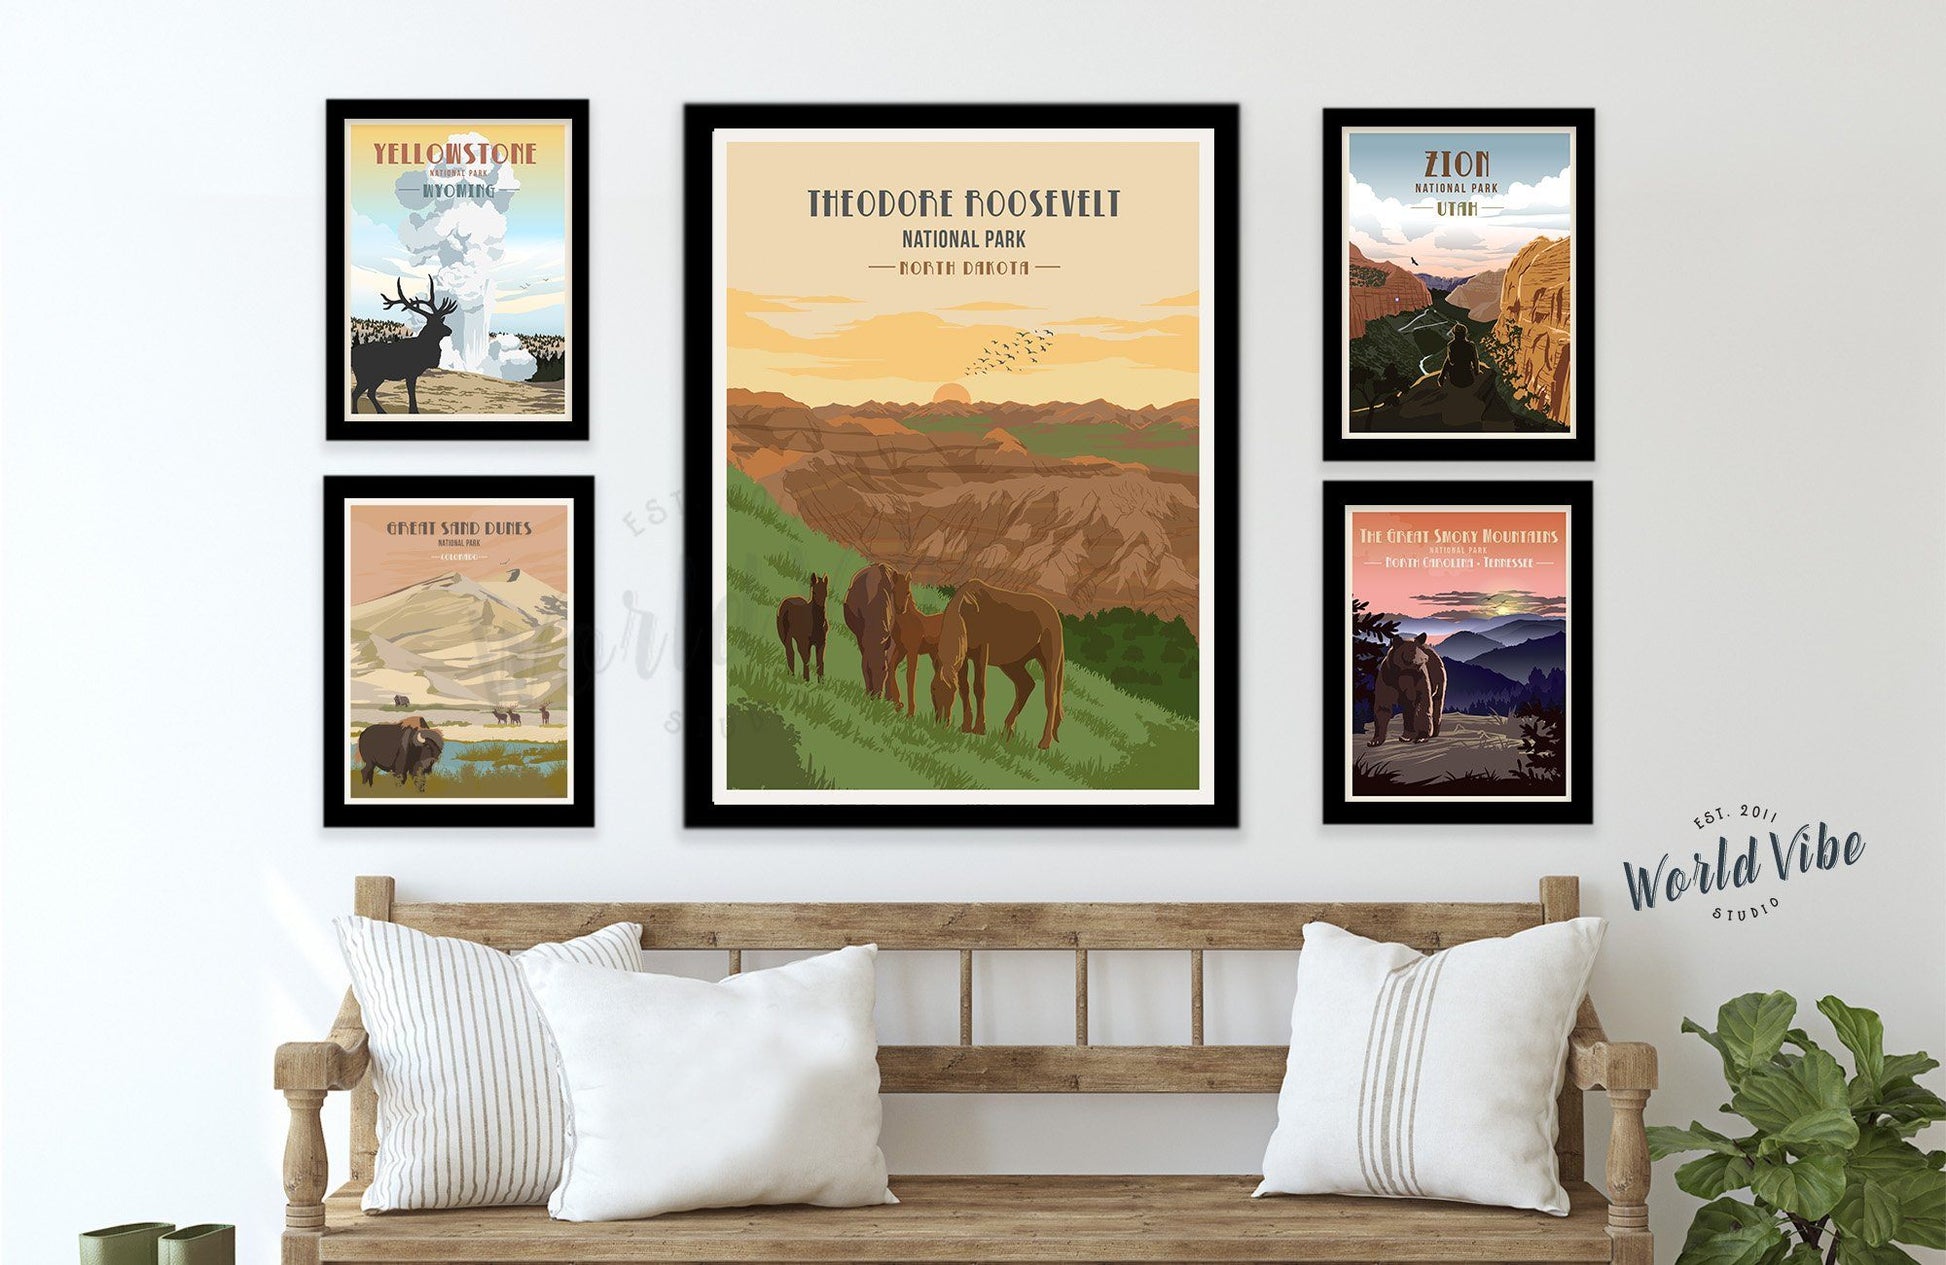 Great Sand Dunes National Park Poster, National Park Poster, National ParkWall Art, Unframed Map World Vibe Studio 